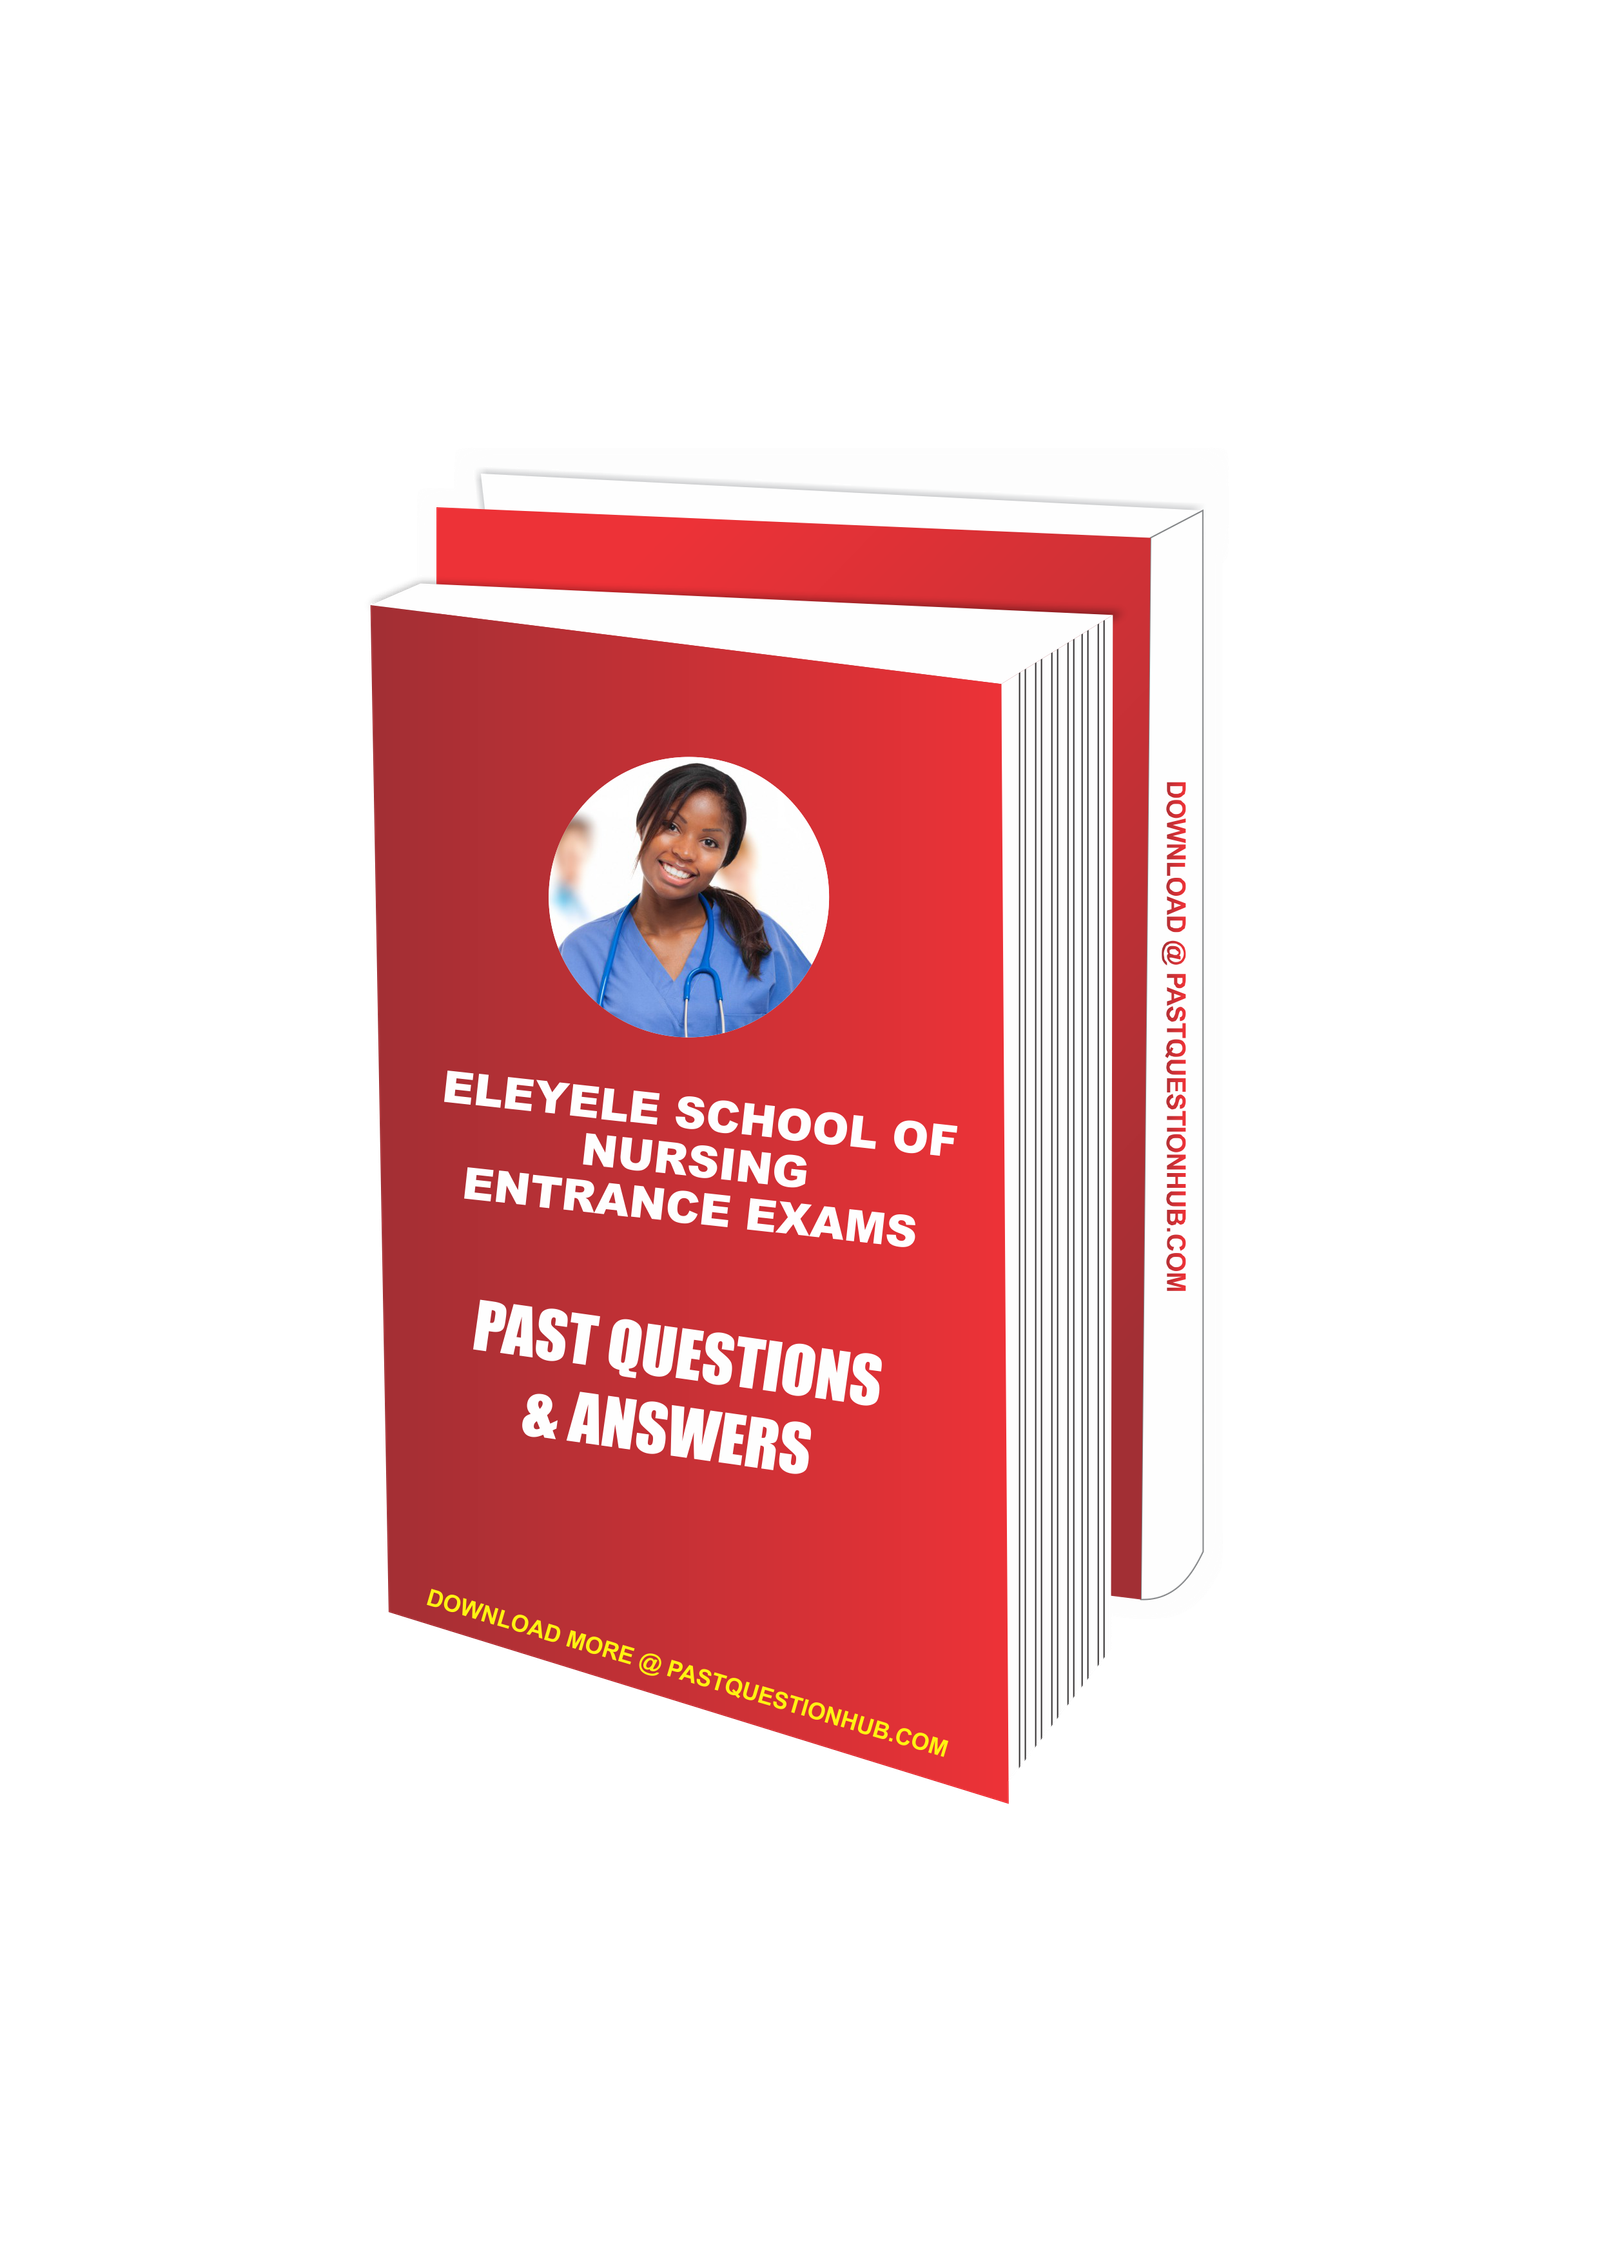 Eleyele School of Nursing Past Questions